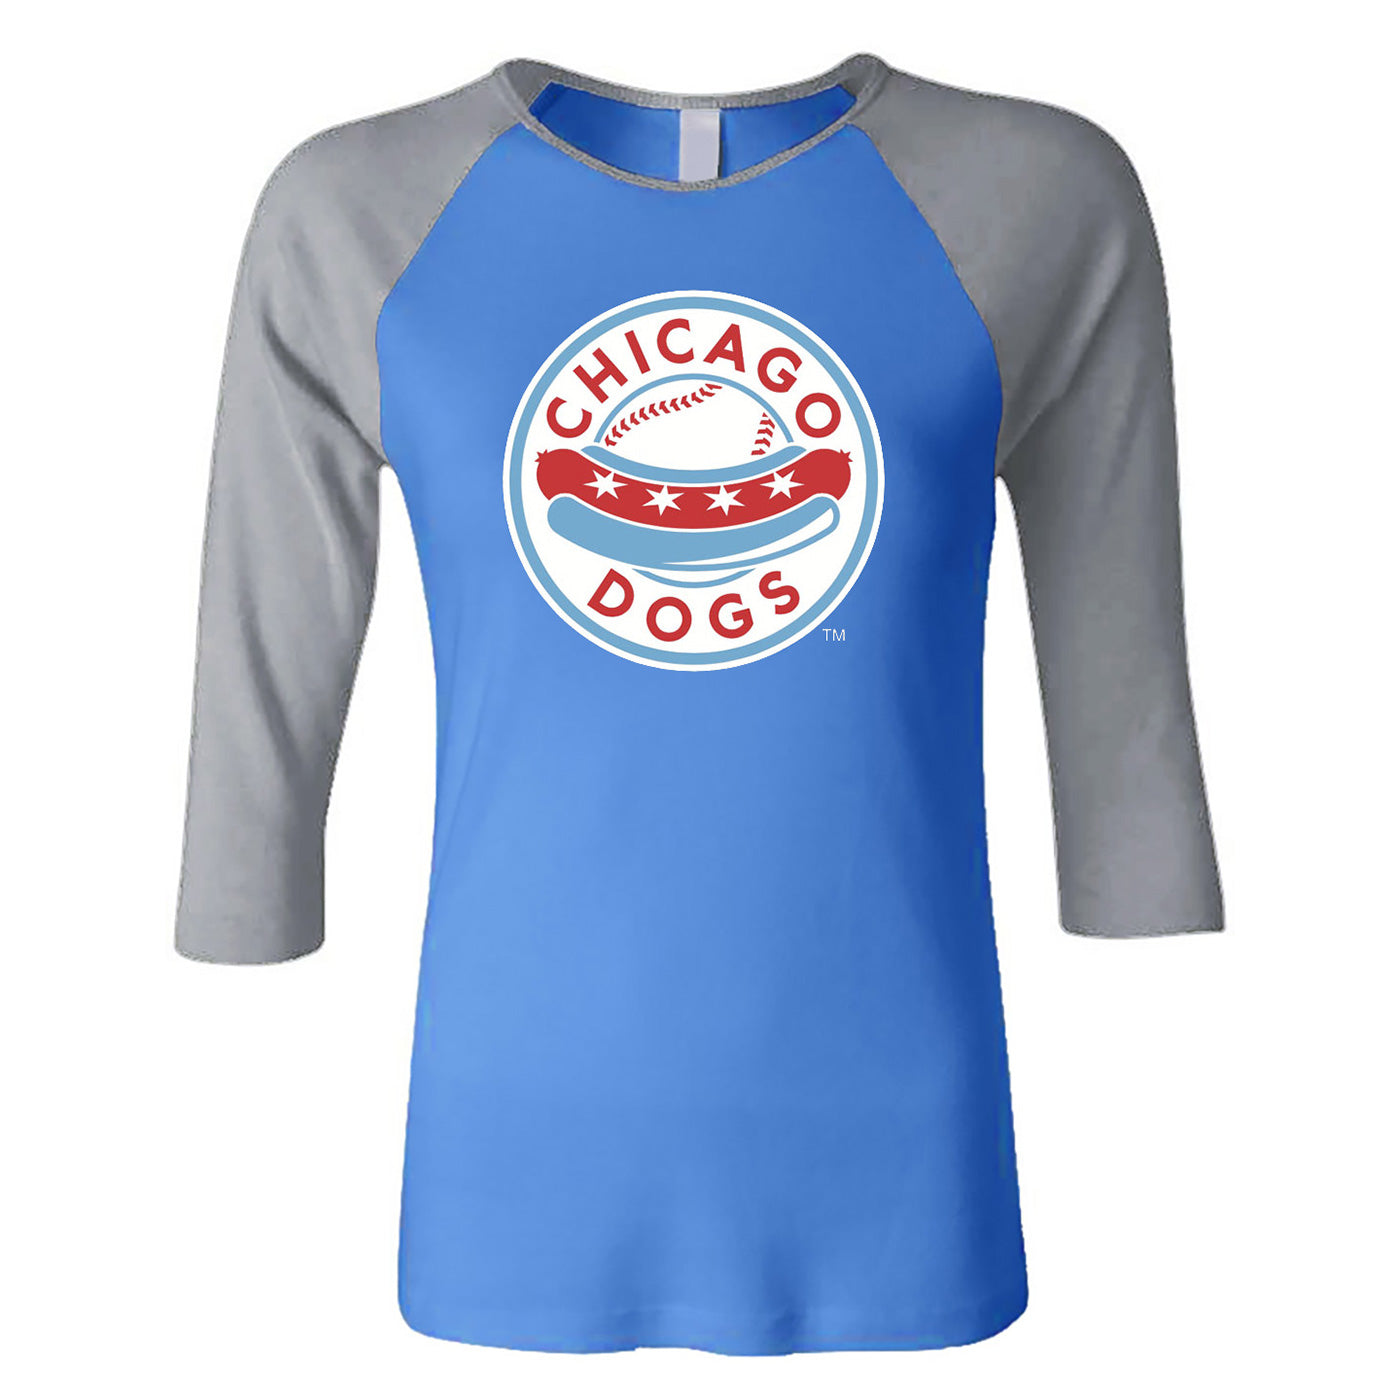 Chicago Dogs Womens Primary Logo 3/4 Sleeve Raglan Tee - Light Blue/Grey - Chicago Dogs Team Store